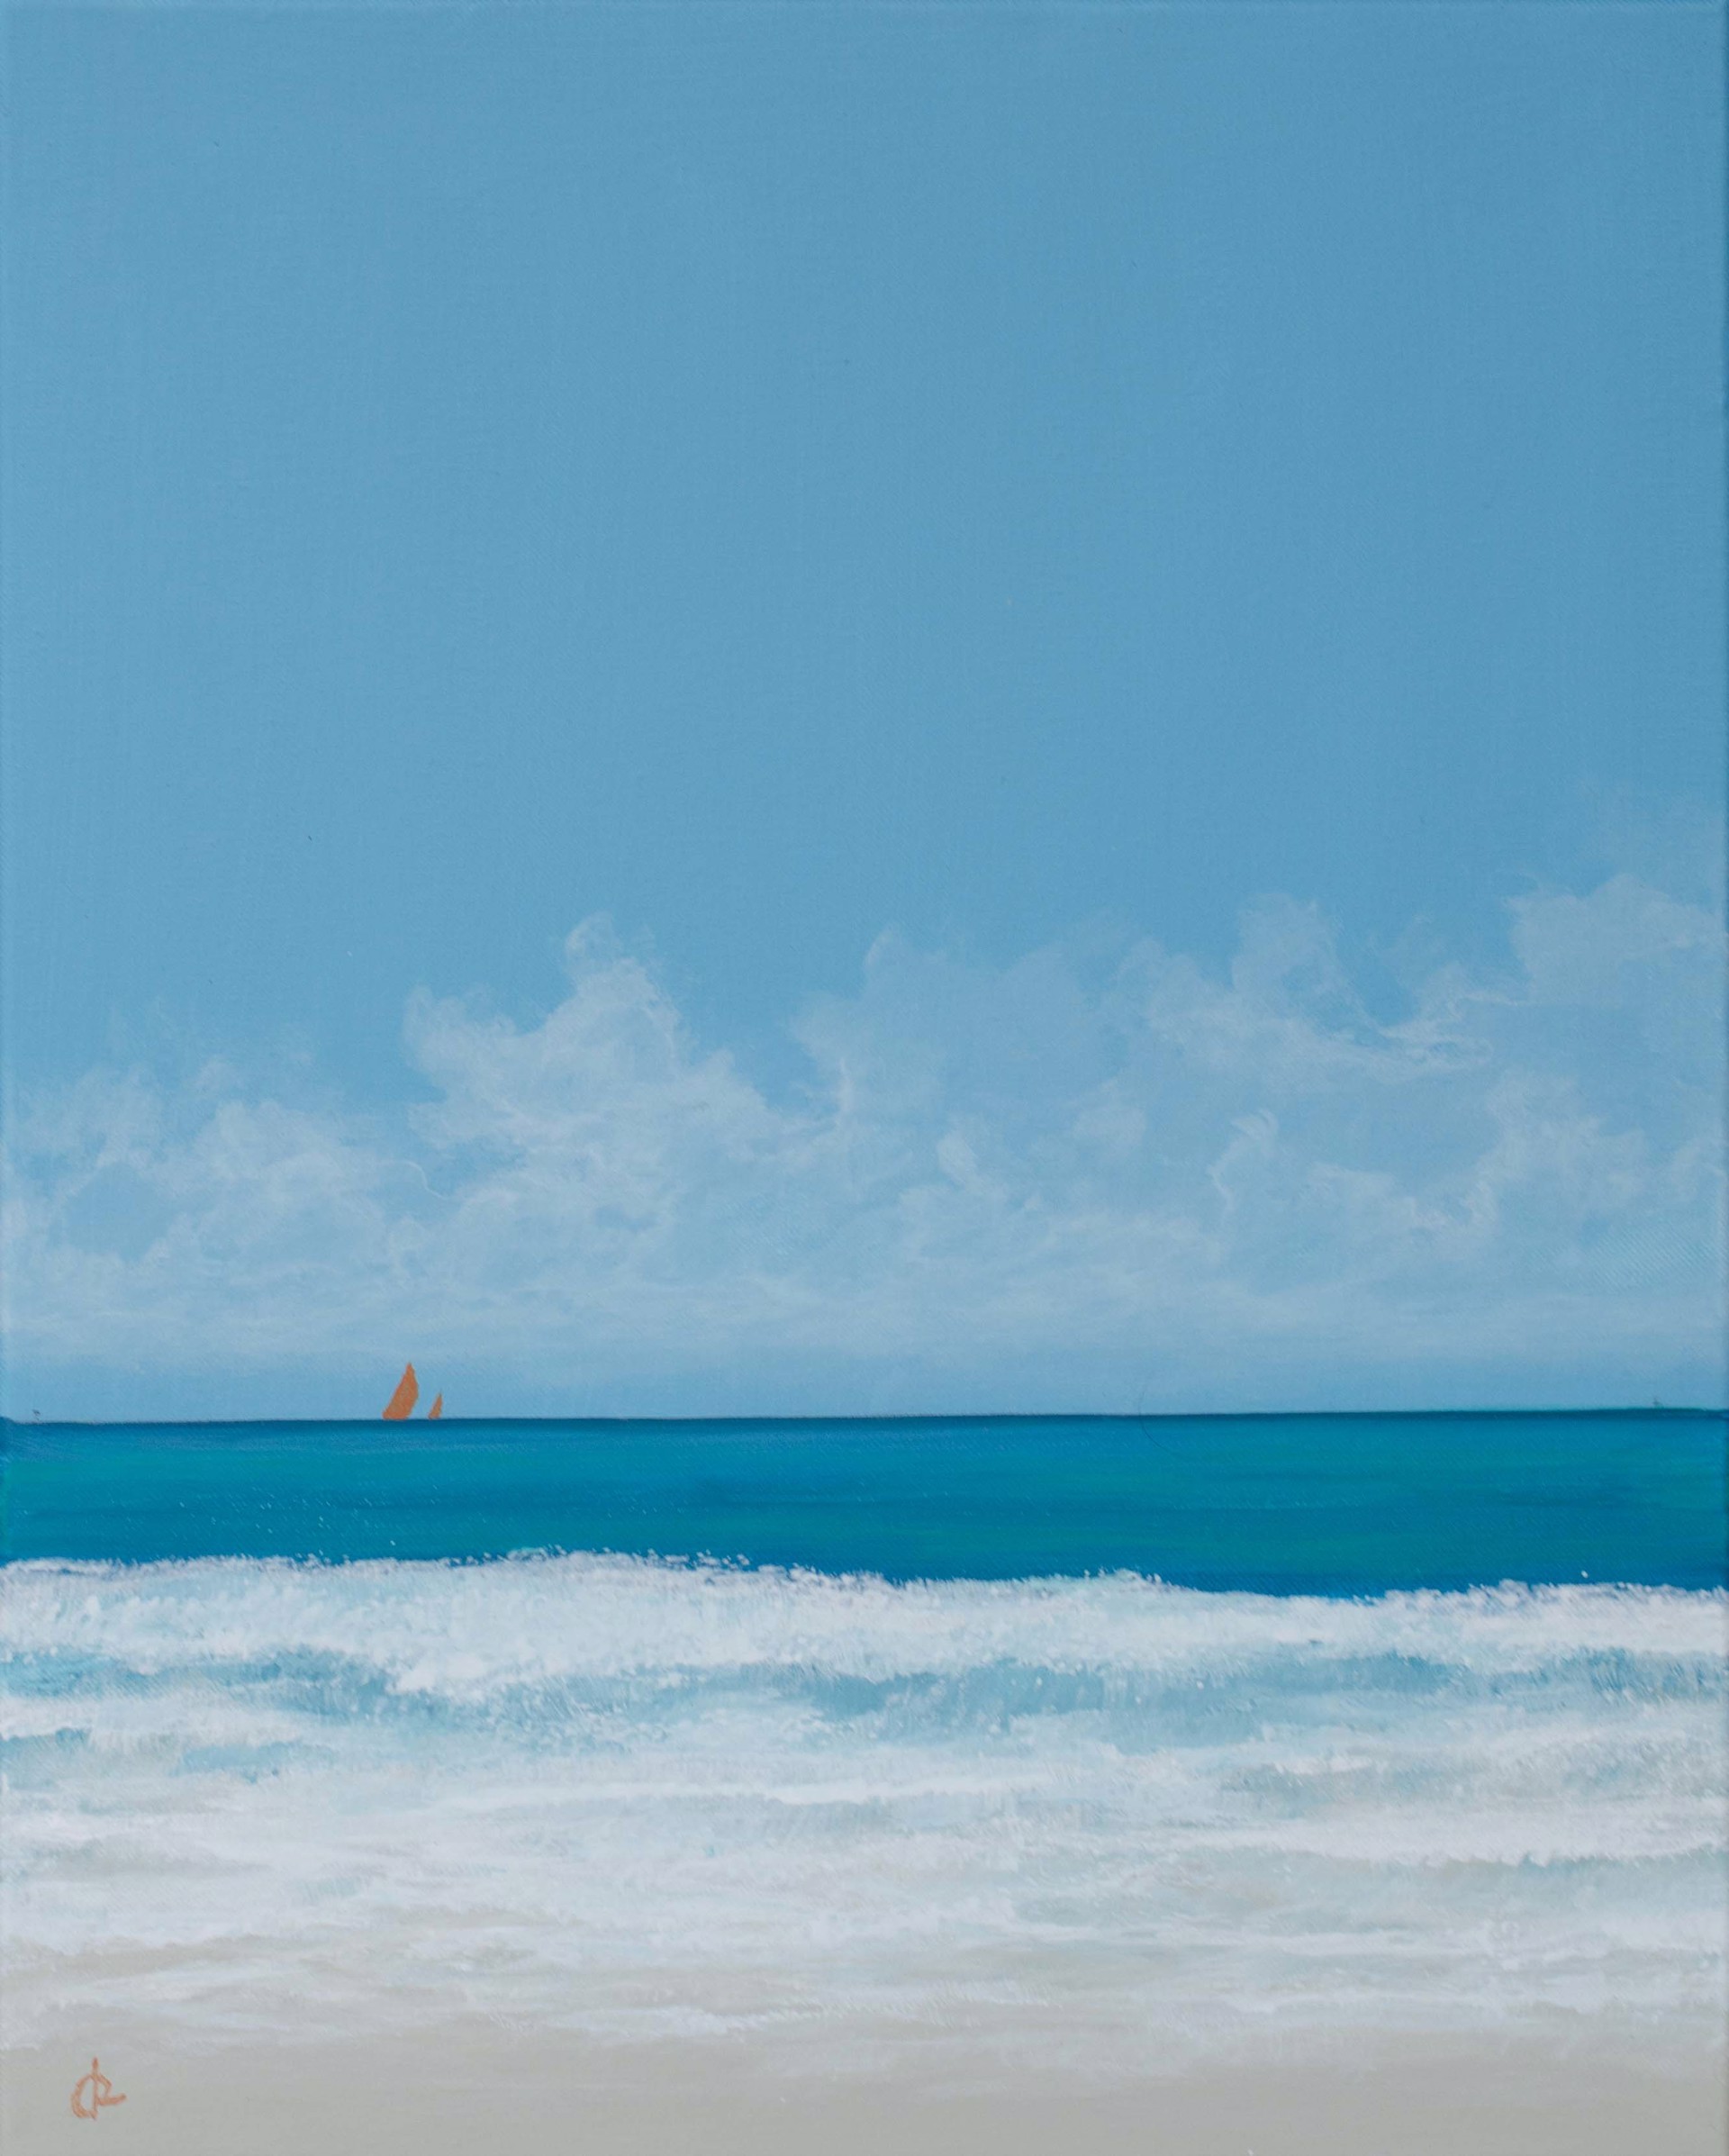 Surf Break I by Peter Laughton